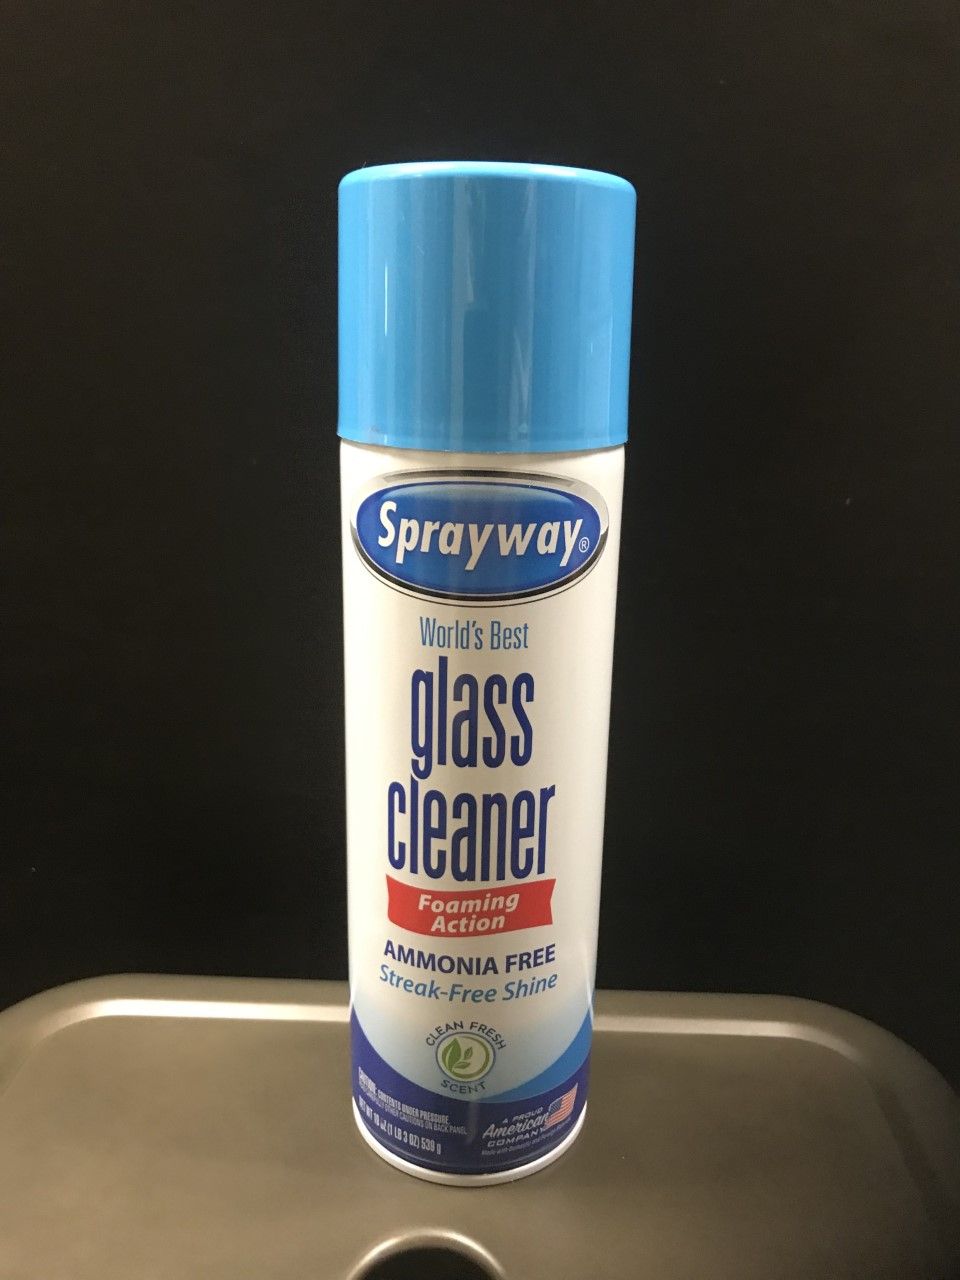 Glass Cleaner by Sprayway.jpg